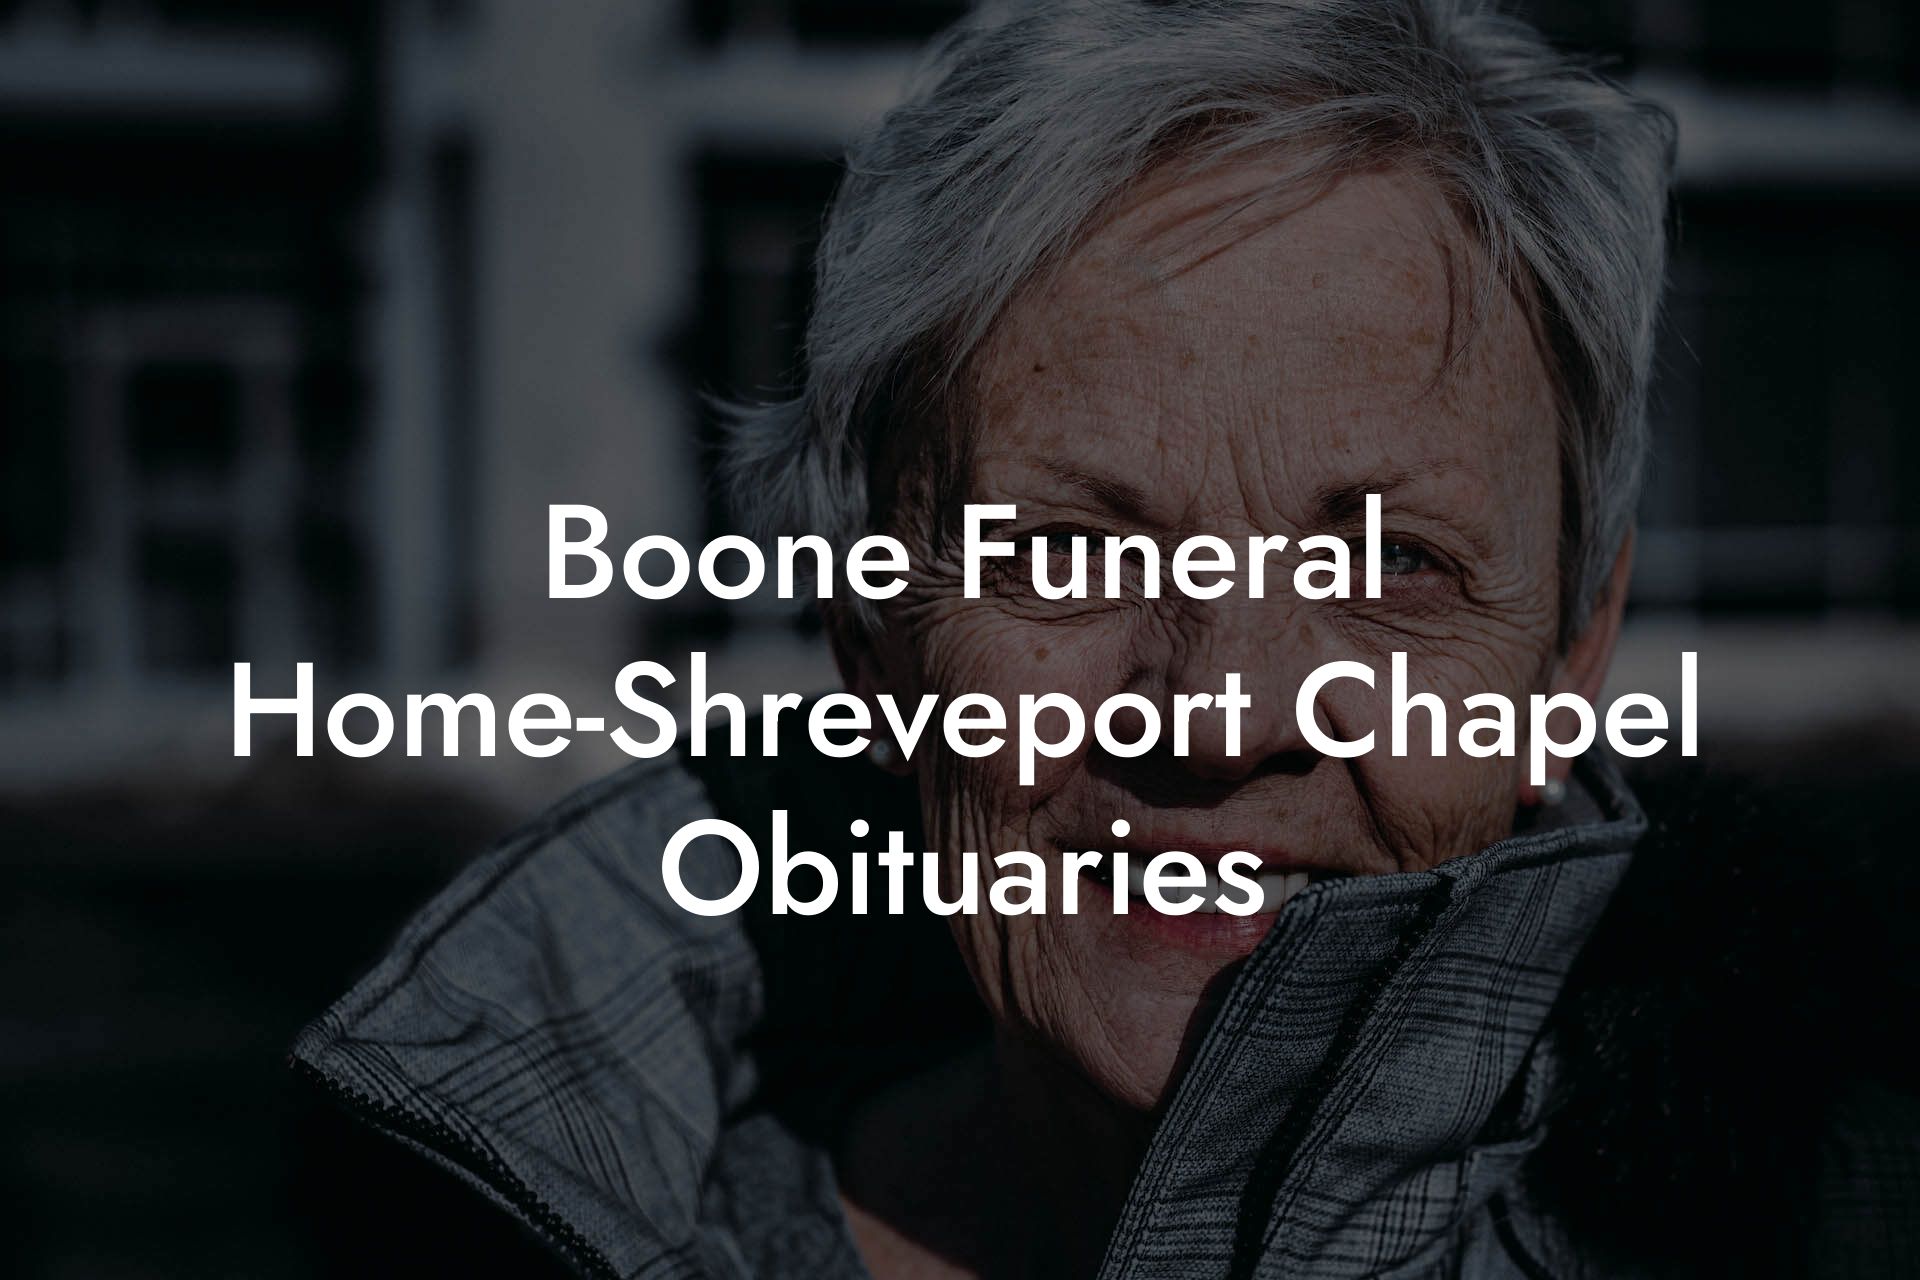 Boone Funeral Home-Shreveport Chapel Obituaries